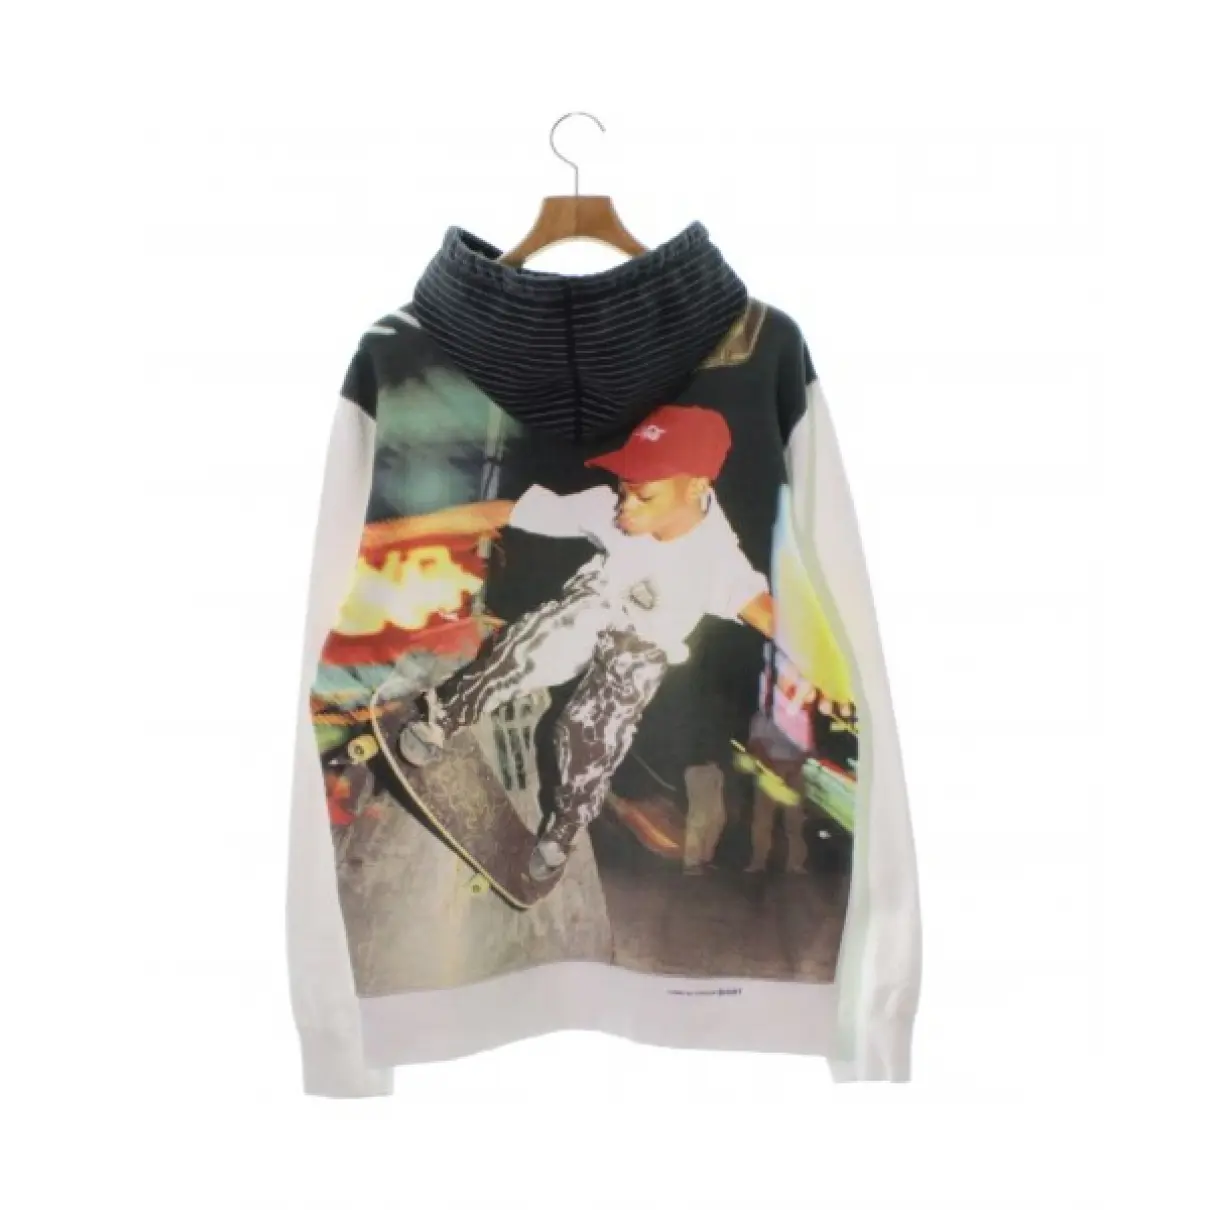 Buy Supreme x Comme Des Garçons Sweatshirt online